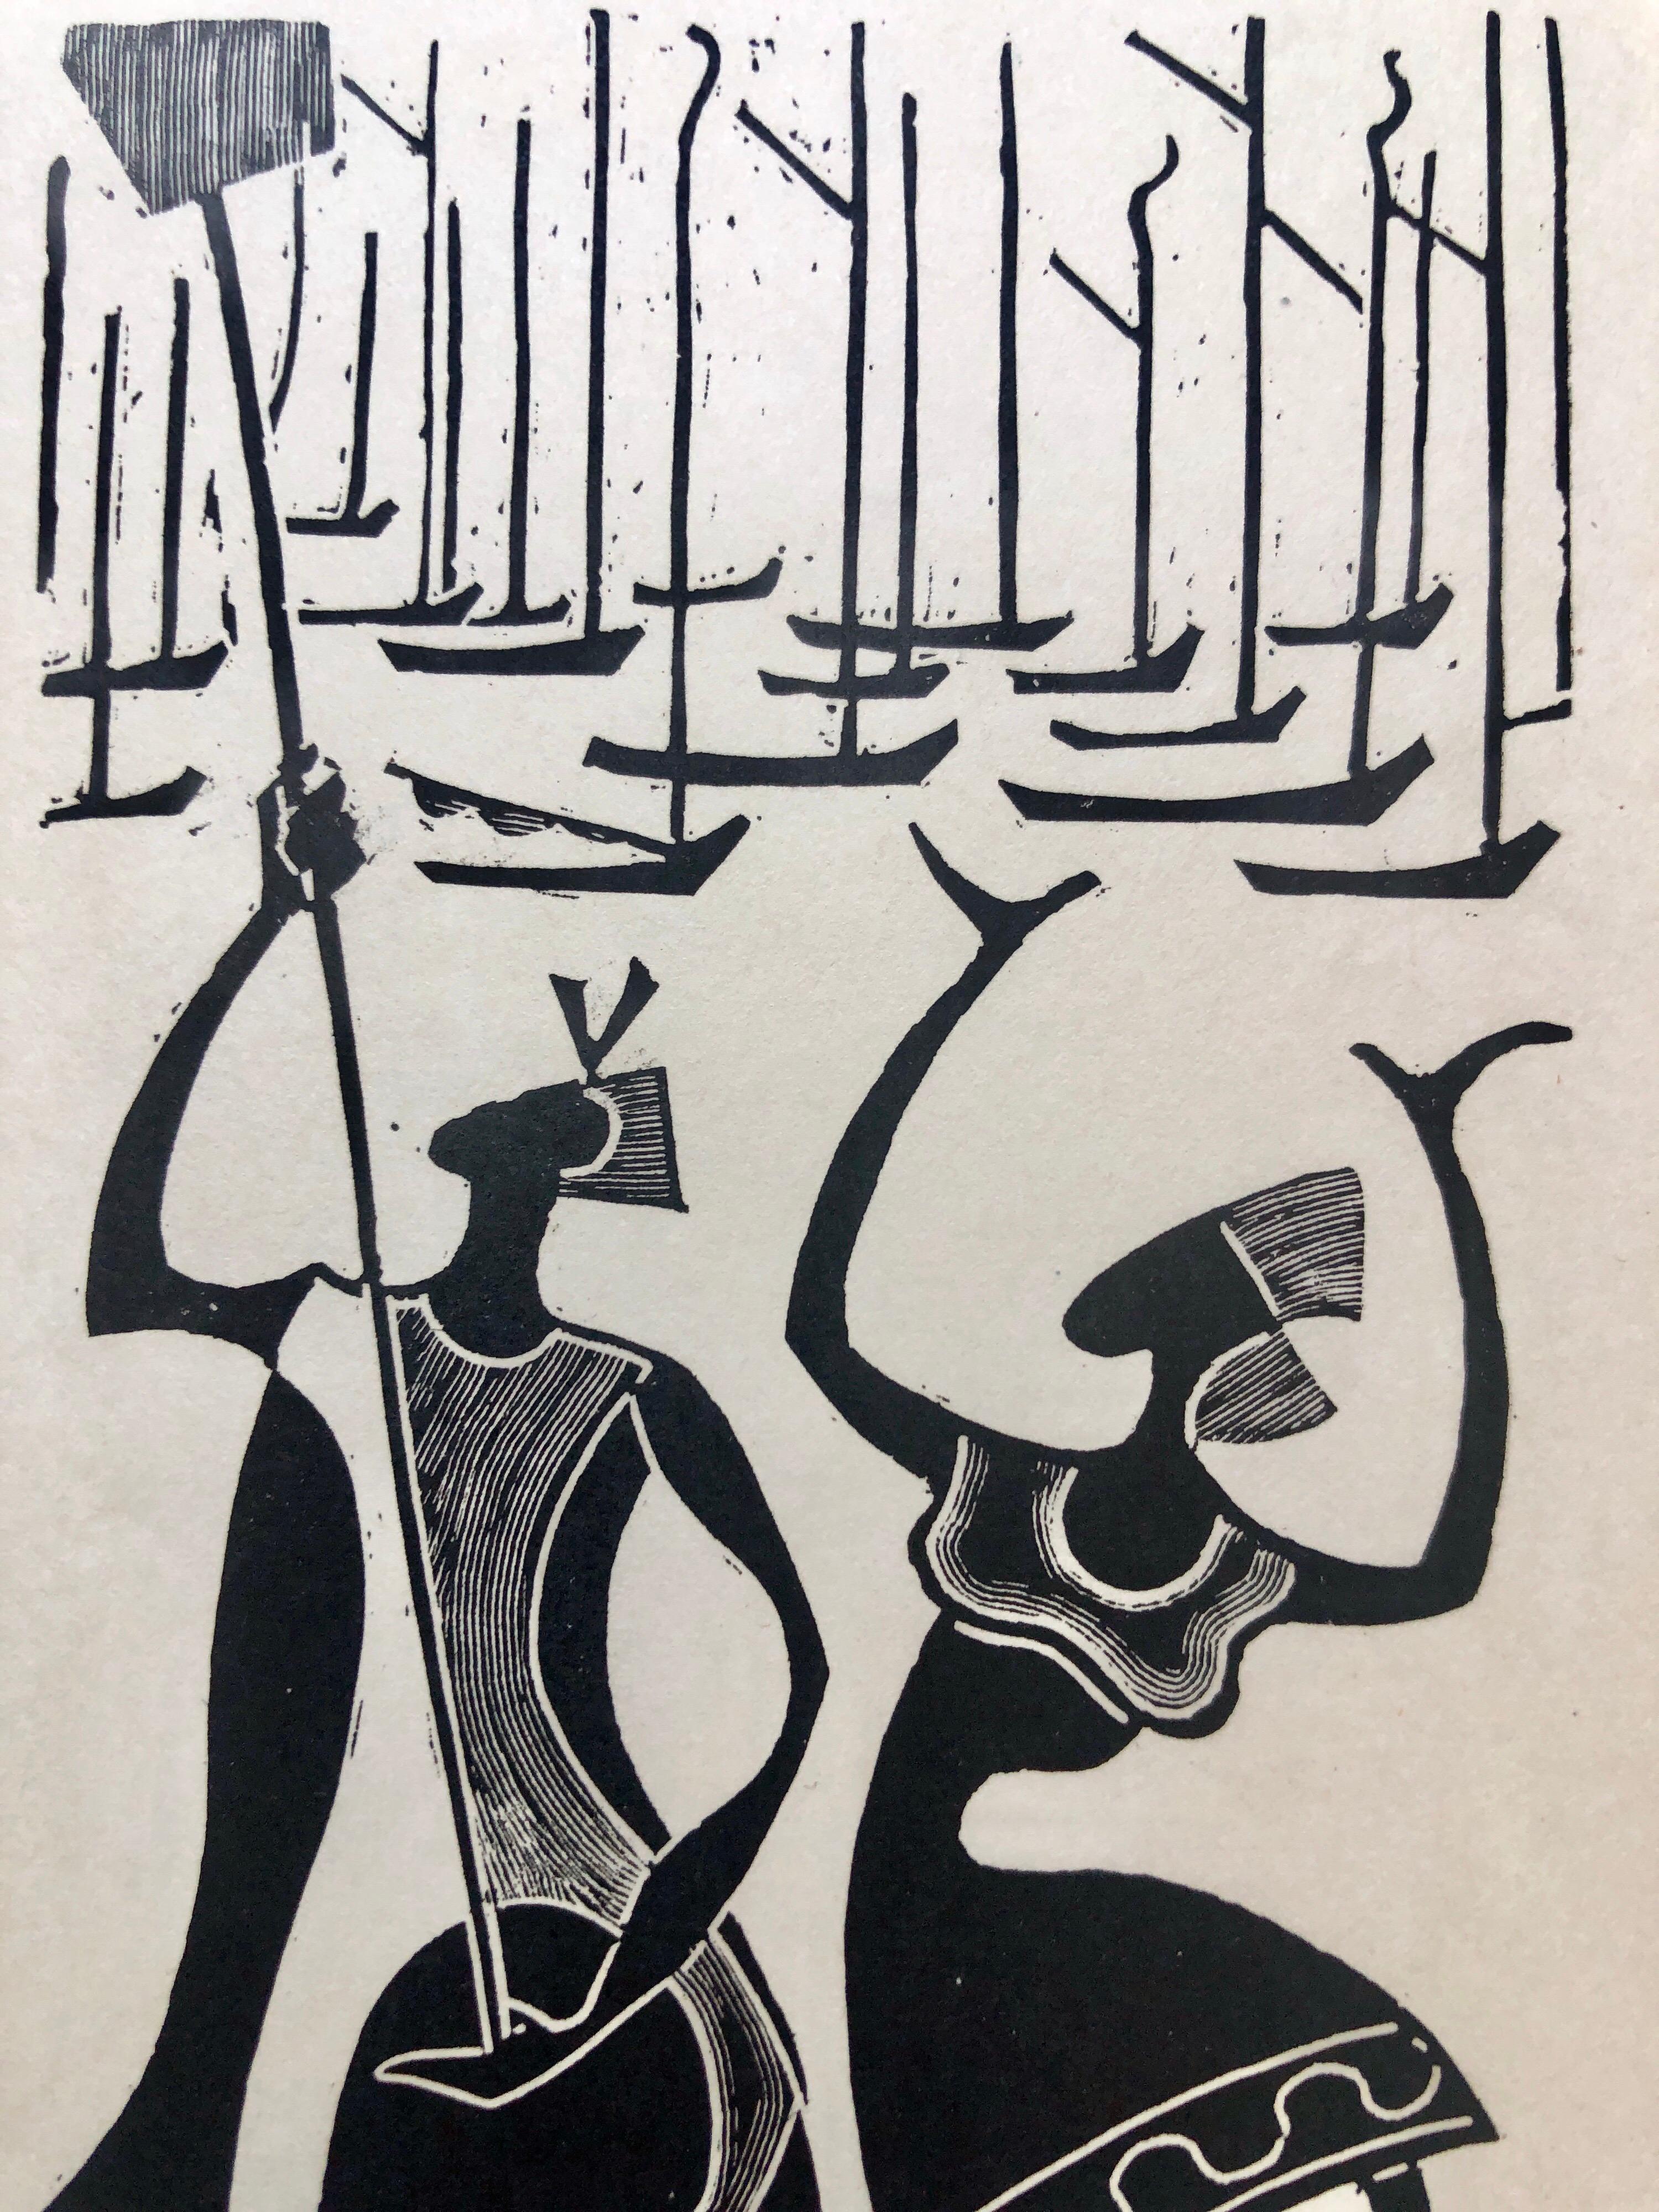 1945 Brazilian Master, Art Deco Nudes Serigraph Woodcut Carnaval Bahia - Print by Odetto Guersoni